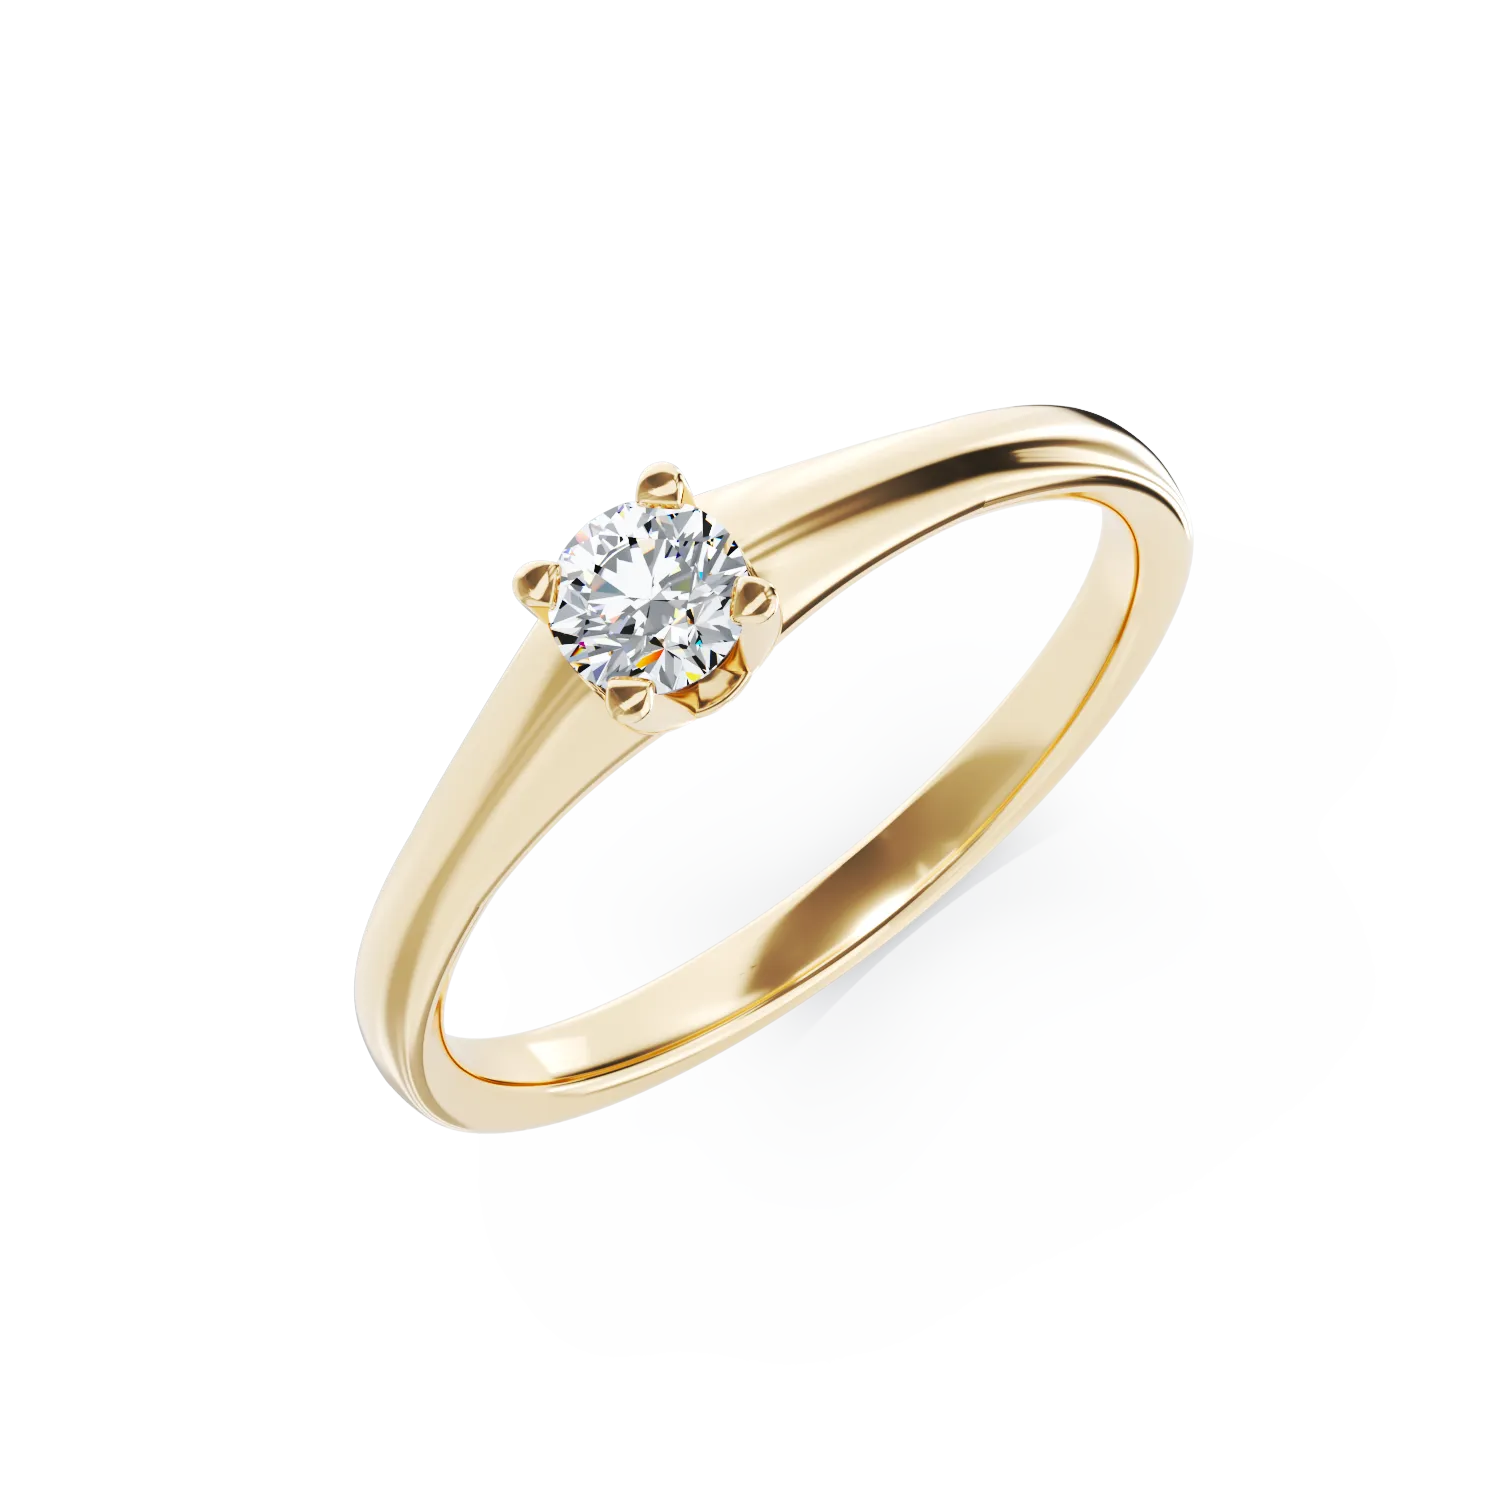 Inel de logodna din aur galben de 18K cu un diamant solitaire de 0.1ct